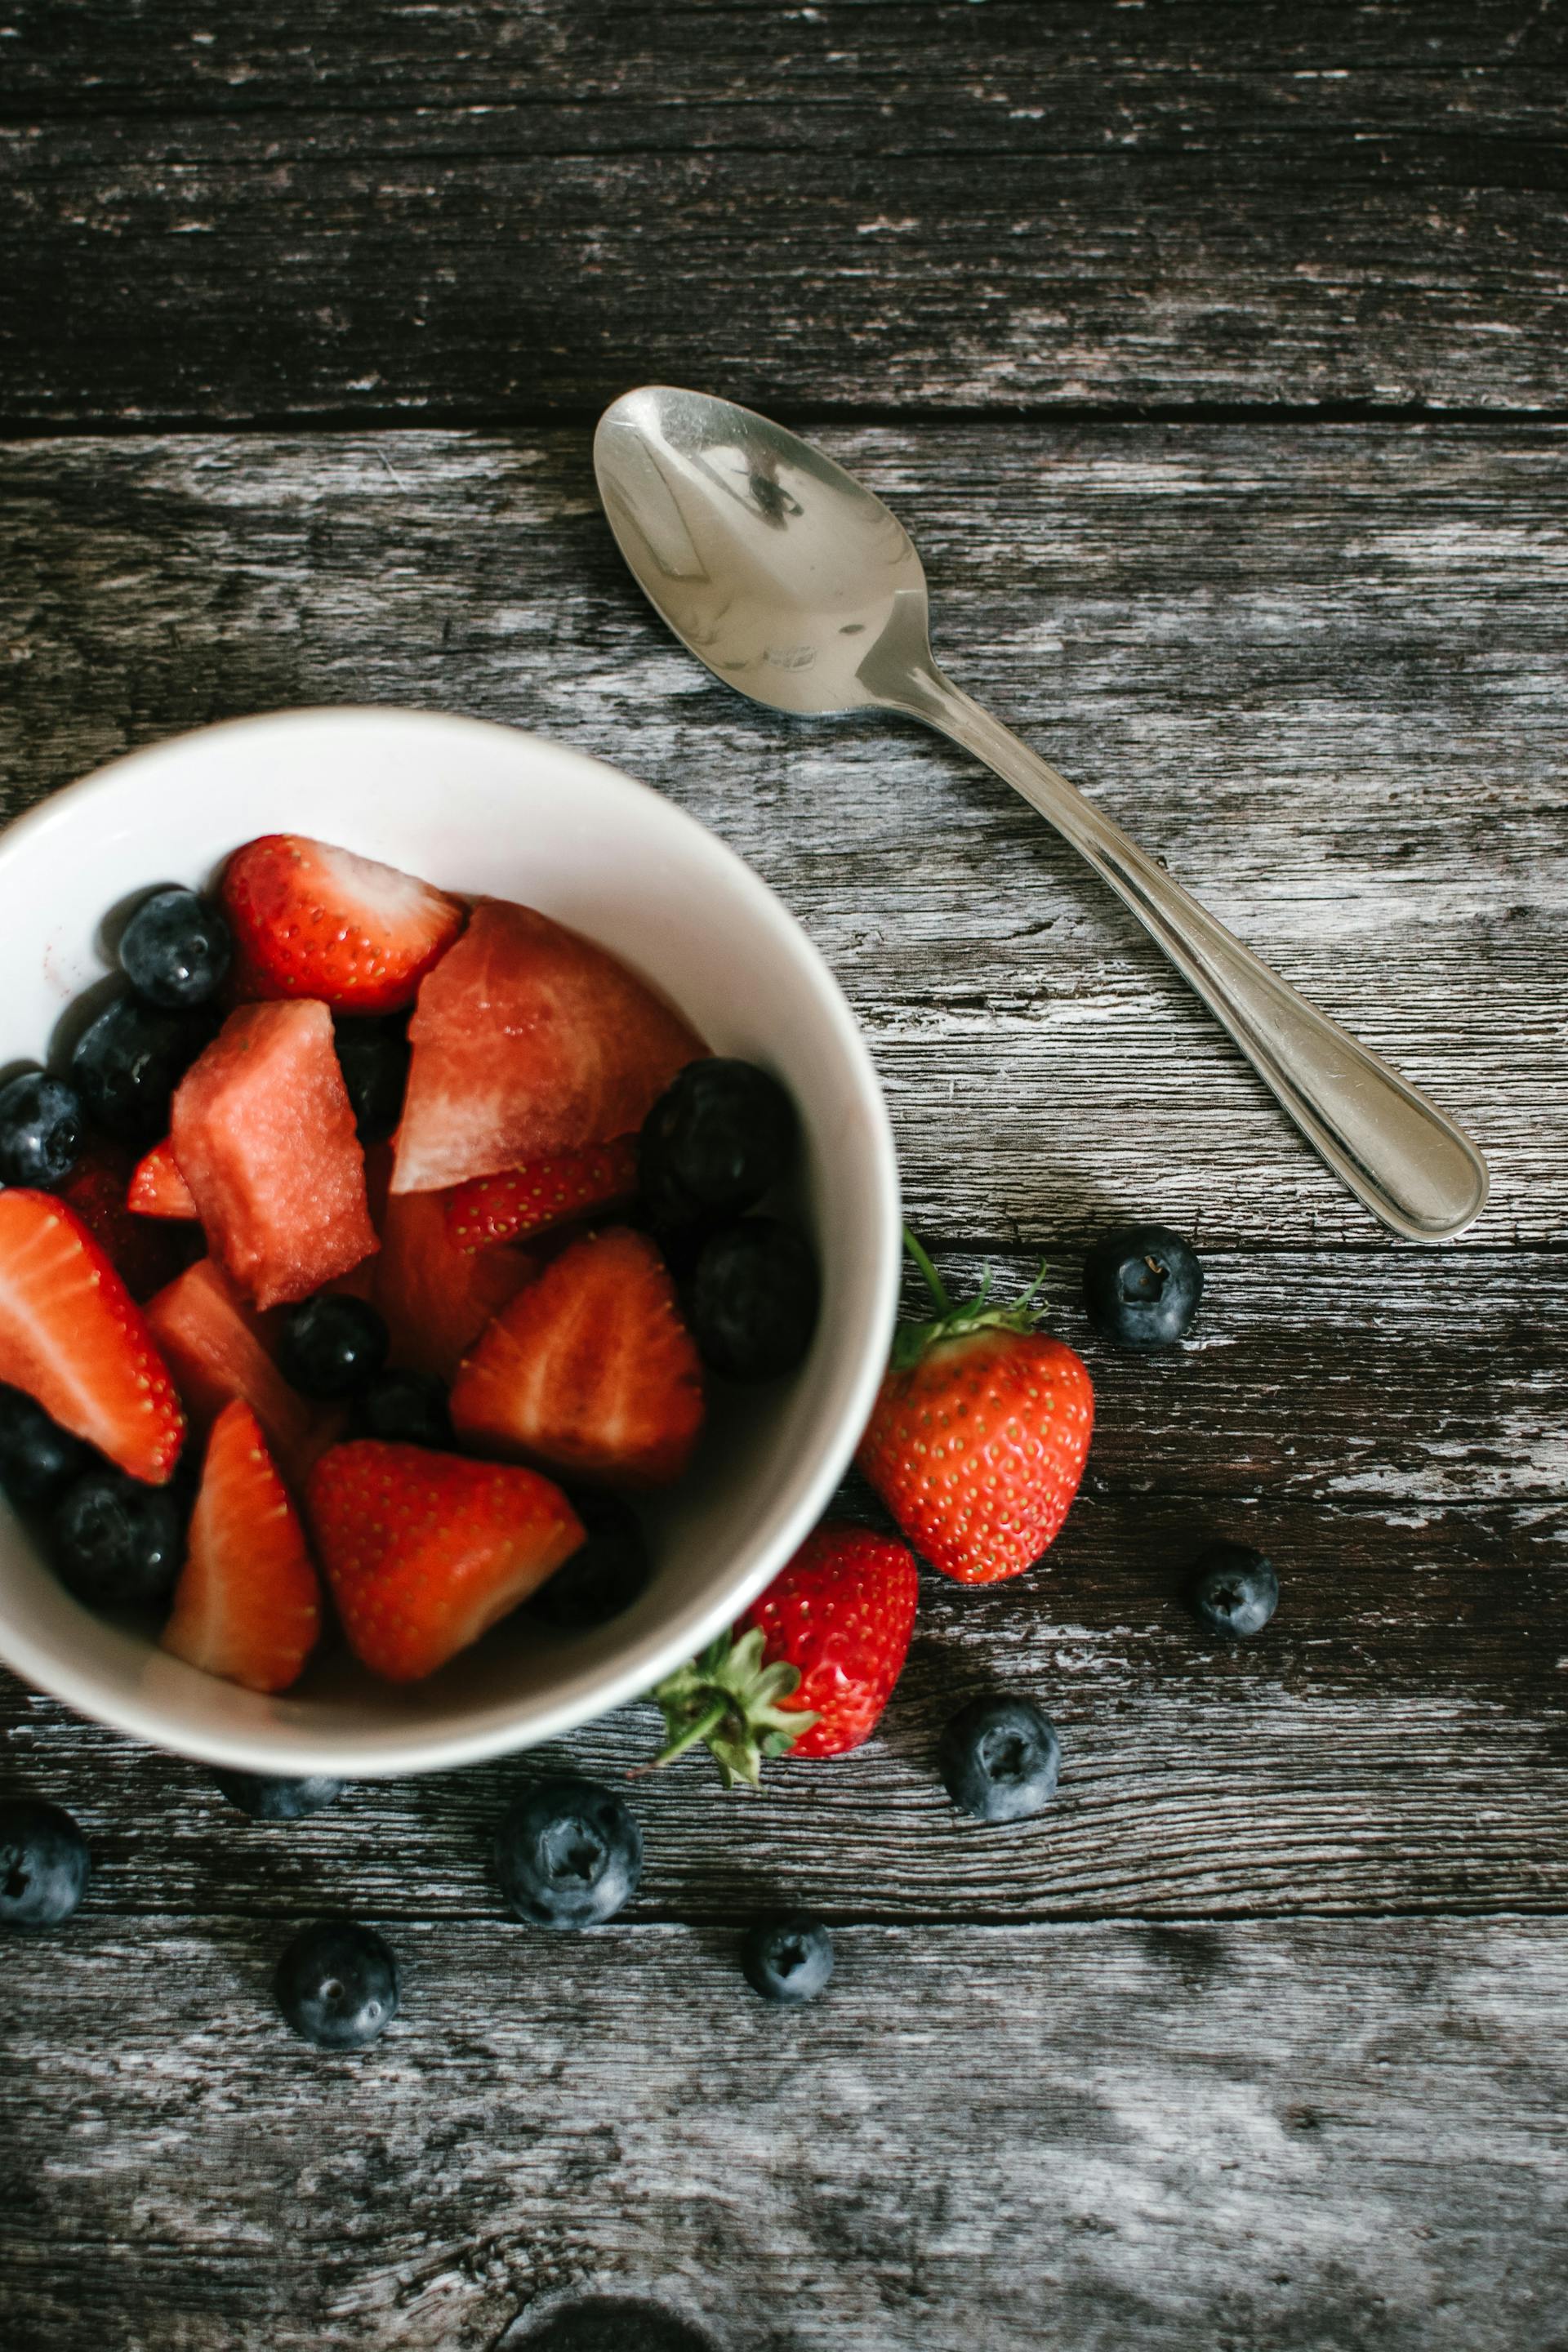 A bowl of fruit | Source: Pexels